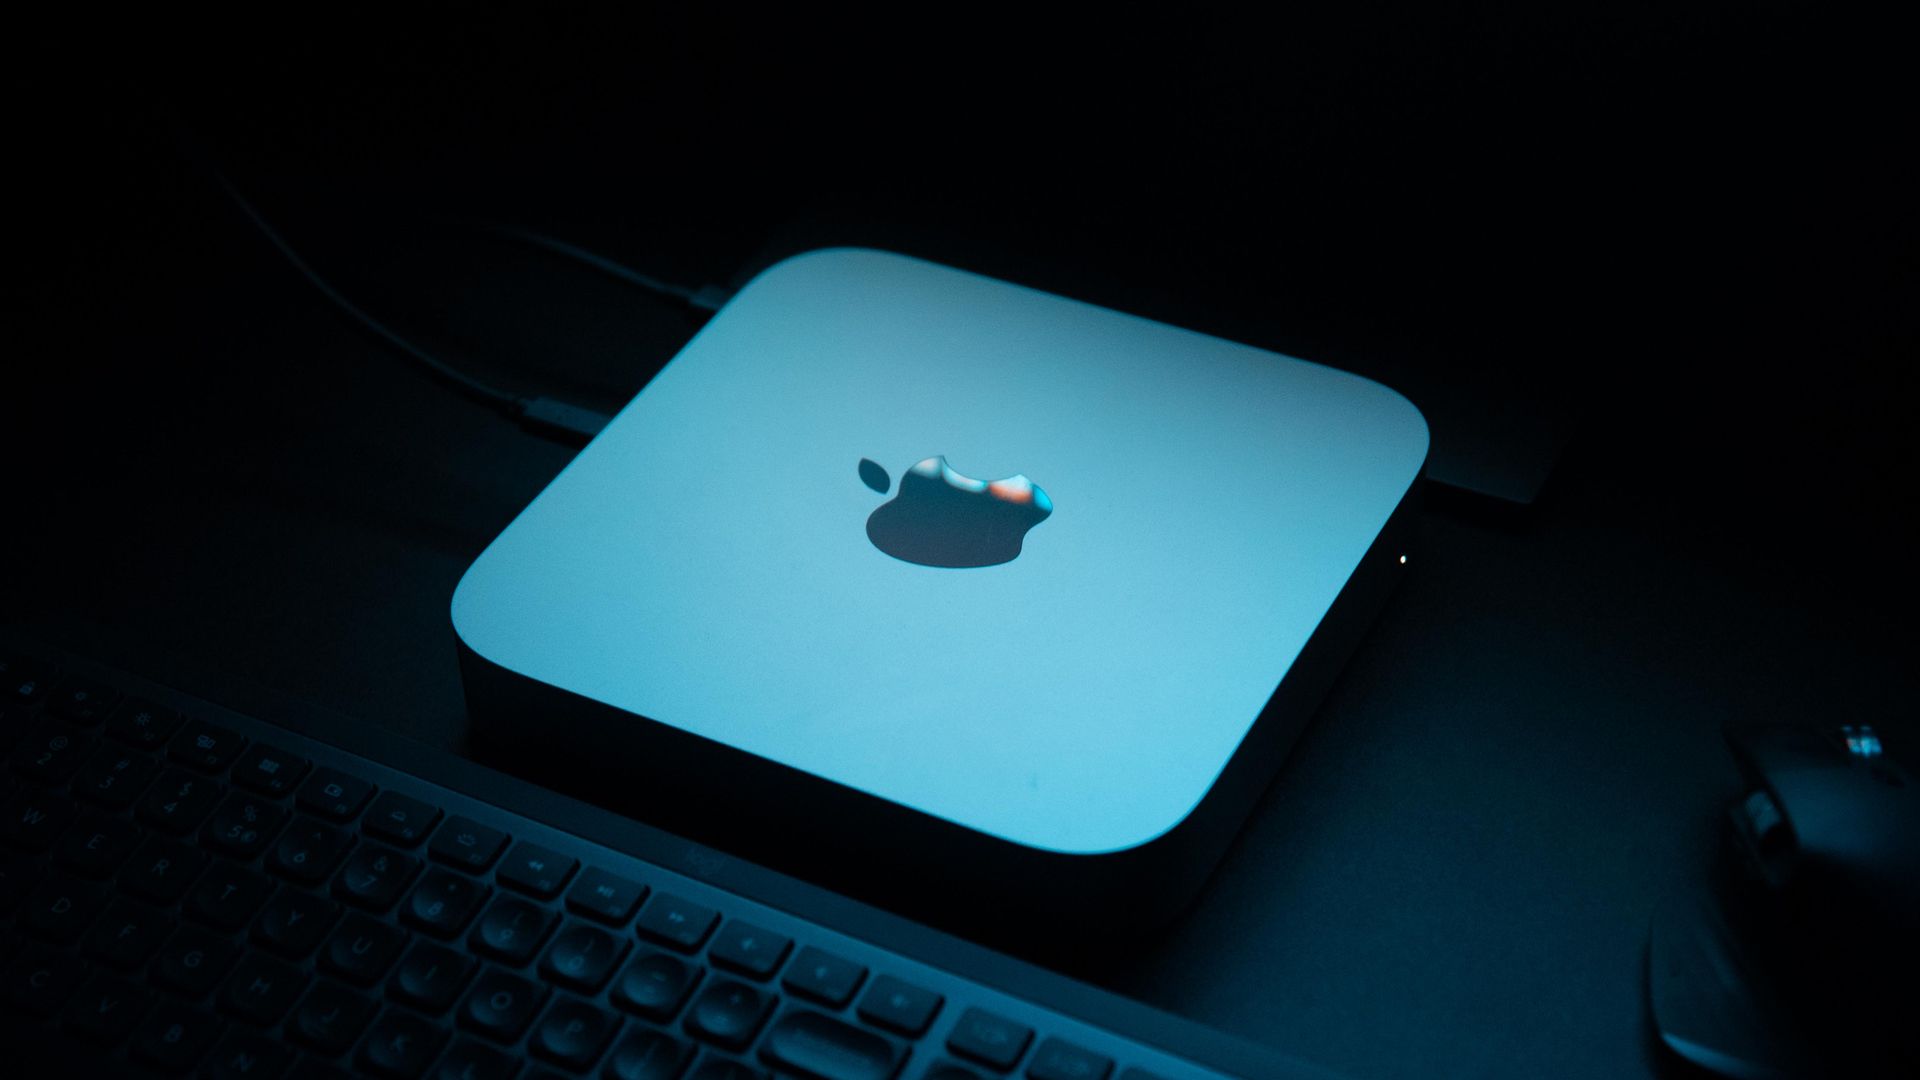 A Mac mini on a desk in a dark room under blue mood lighting.